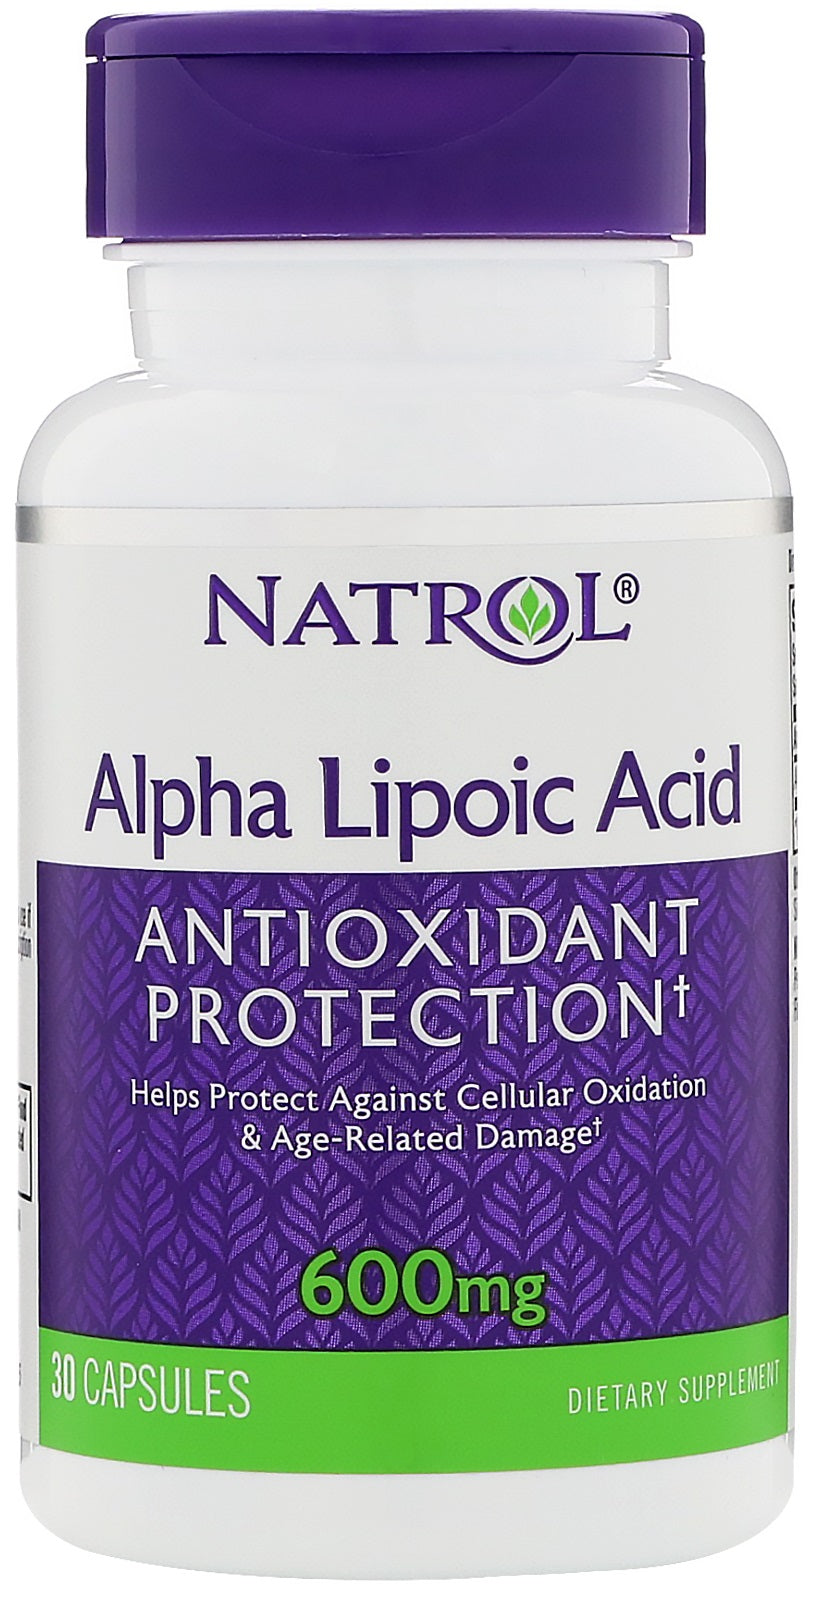 Natrol Alpha Lipoic Acid 600mg, 30 Capsules